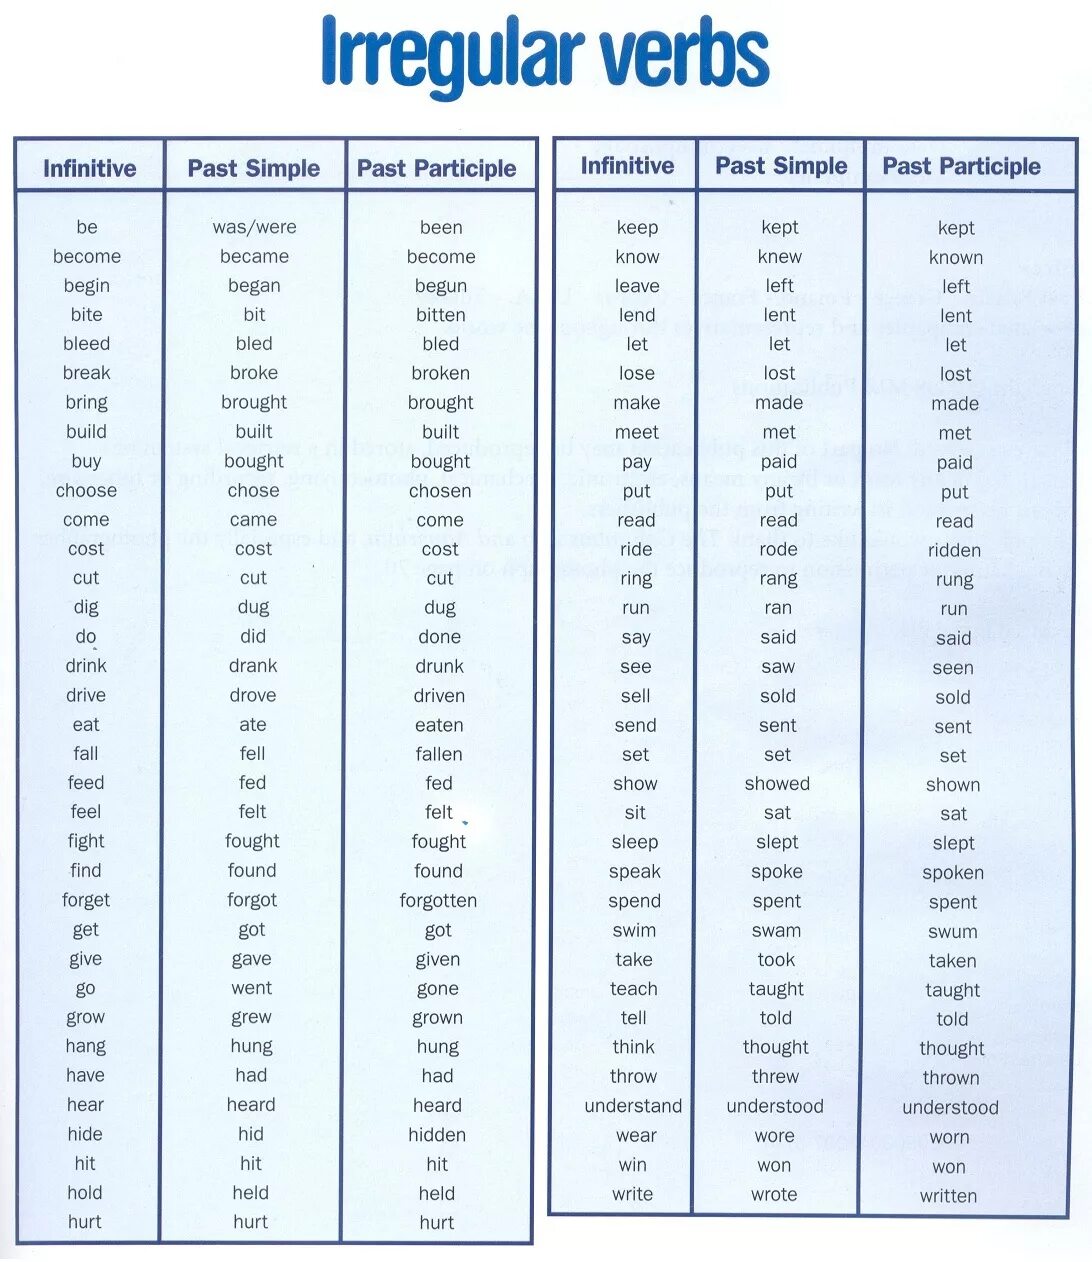 Формы слова say. Past simple Irregular verbs таблица. Past simple таблица неправильных глаголов. Неправильные глаголы английского Irregular verbs. Past participle таблица неправильных глаголов.